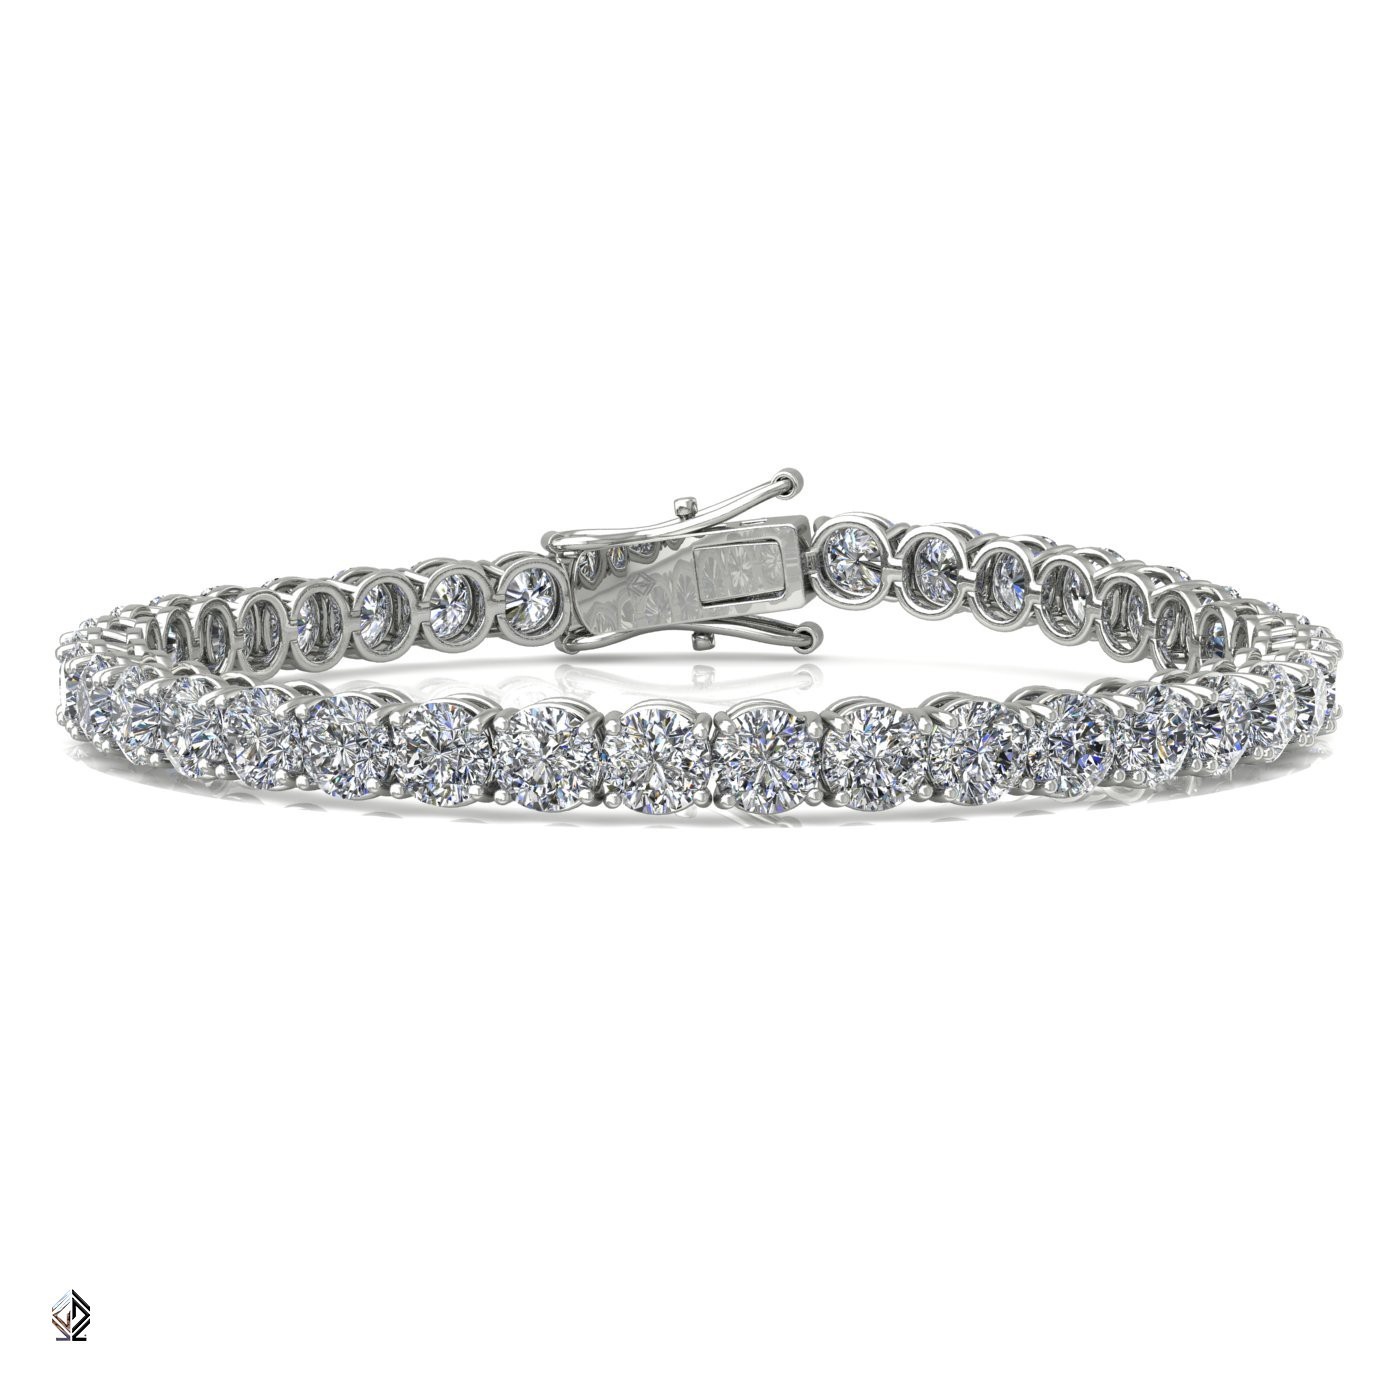 18k white gold 3.8mm 4 prong round shape diamond tennis bracelet in round setting